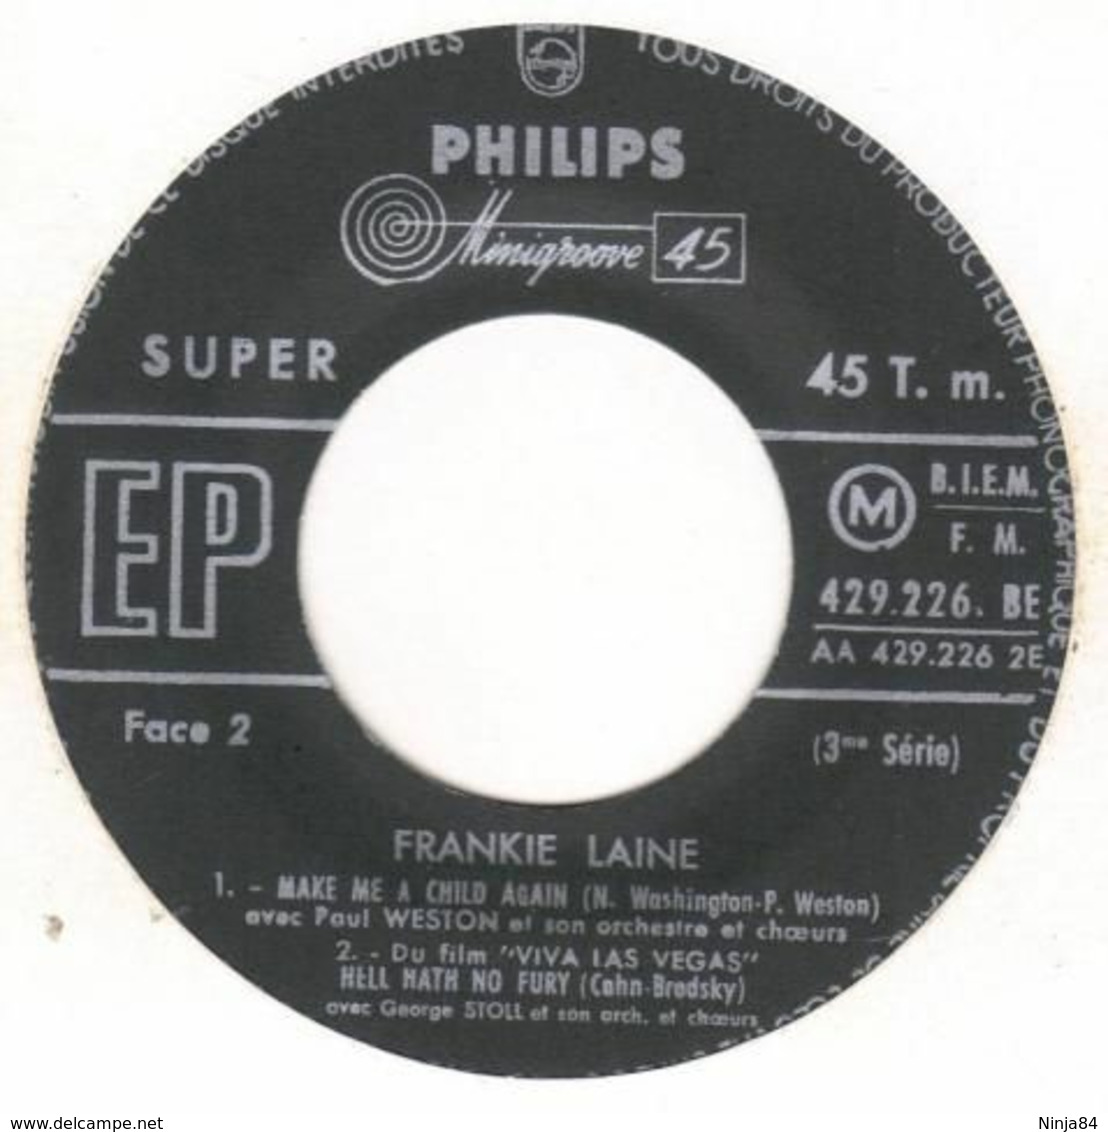 EP 45 RPM (7")  B-O-F  Frankie Laine  "  Blanches Colombes Et Vilains Messieurs  " - Soundtracks, Film Music